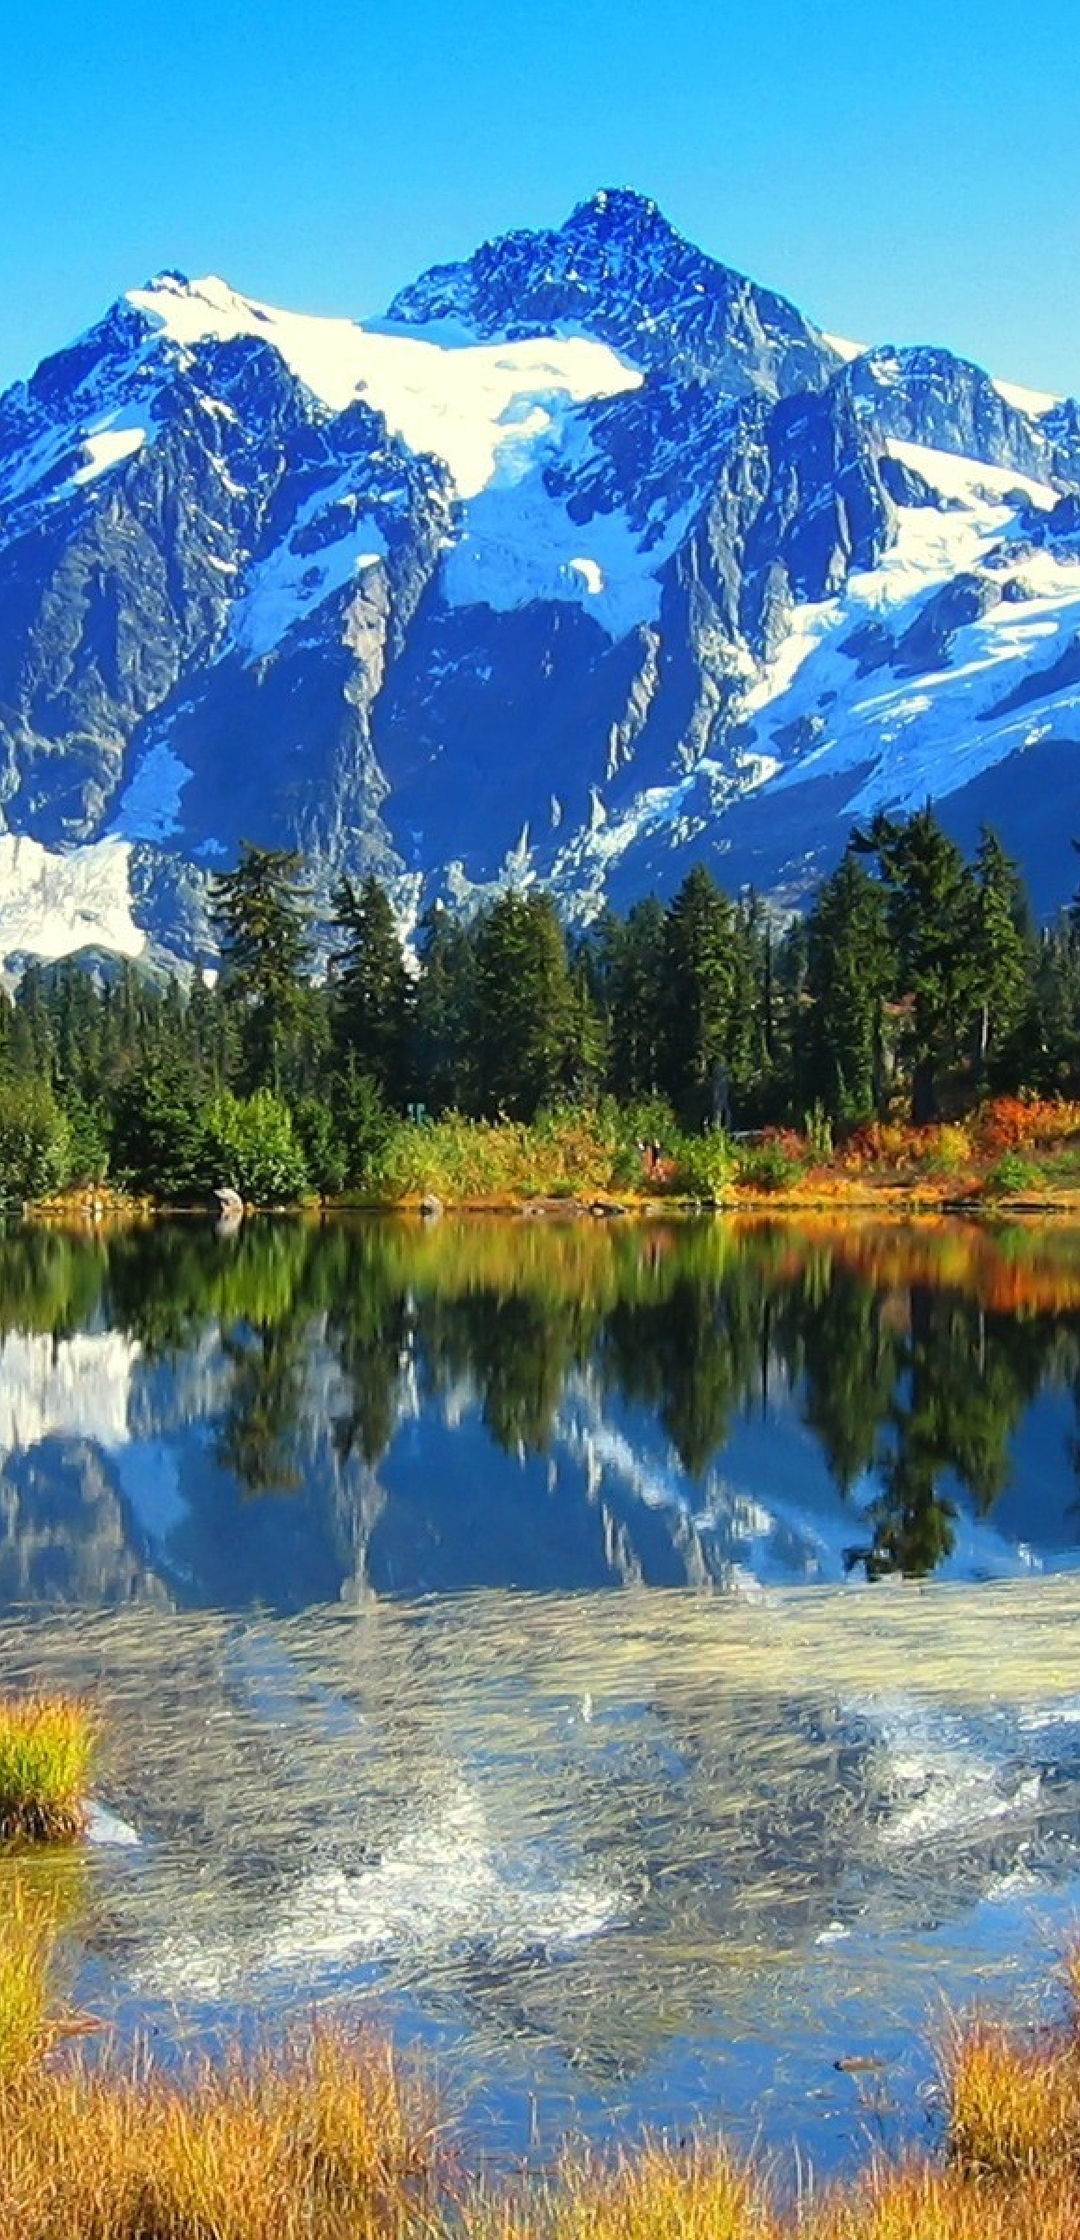 Image: Mountains, lake, trees, reflection